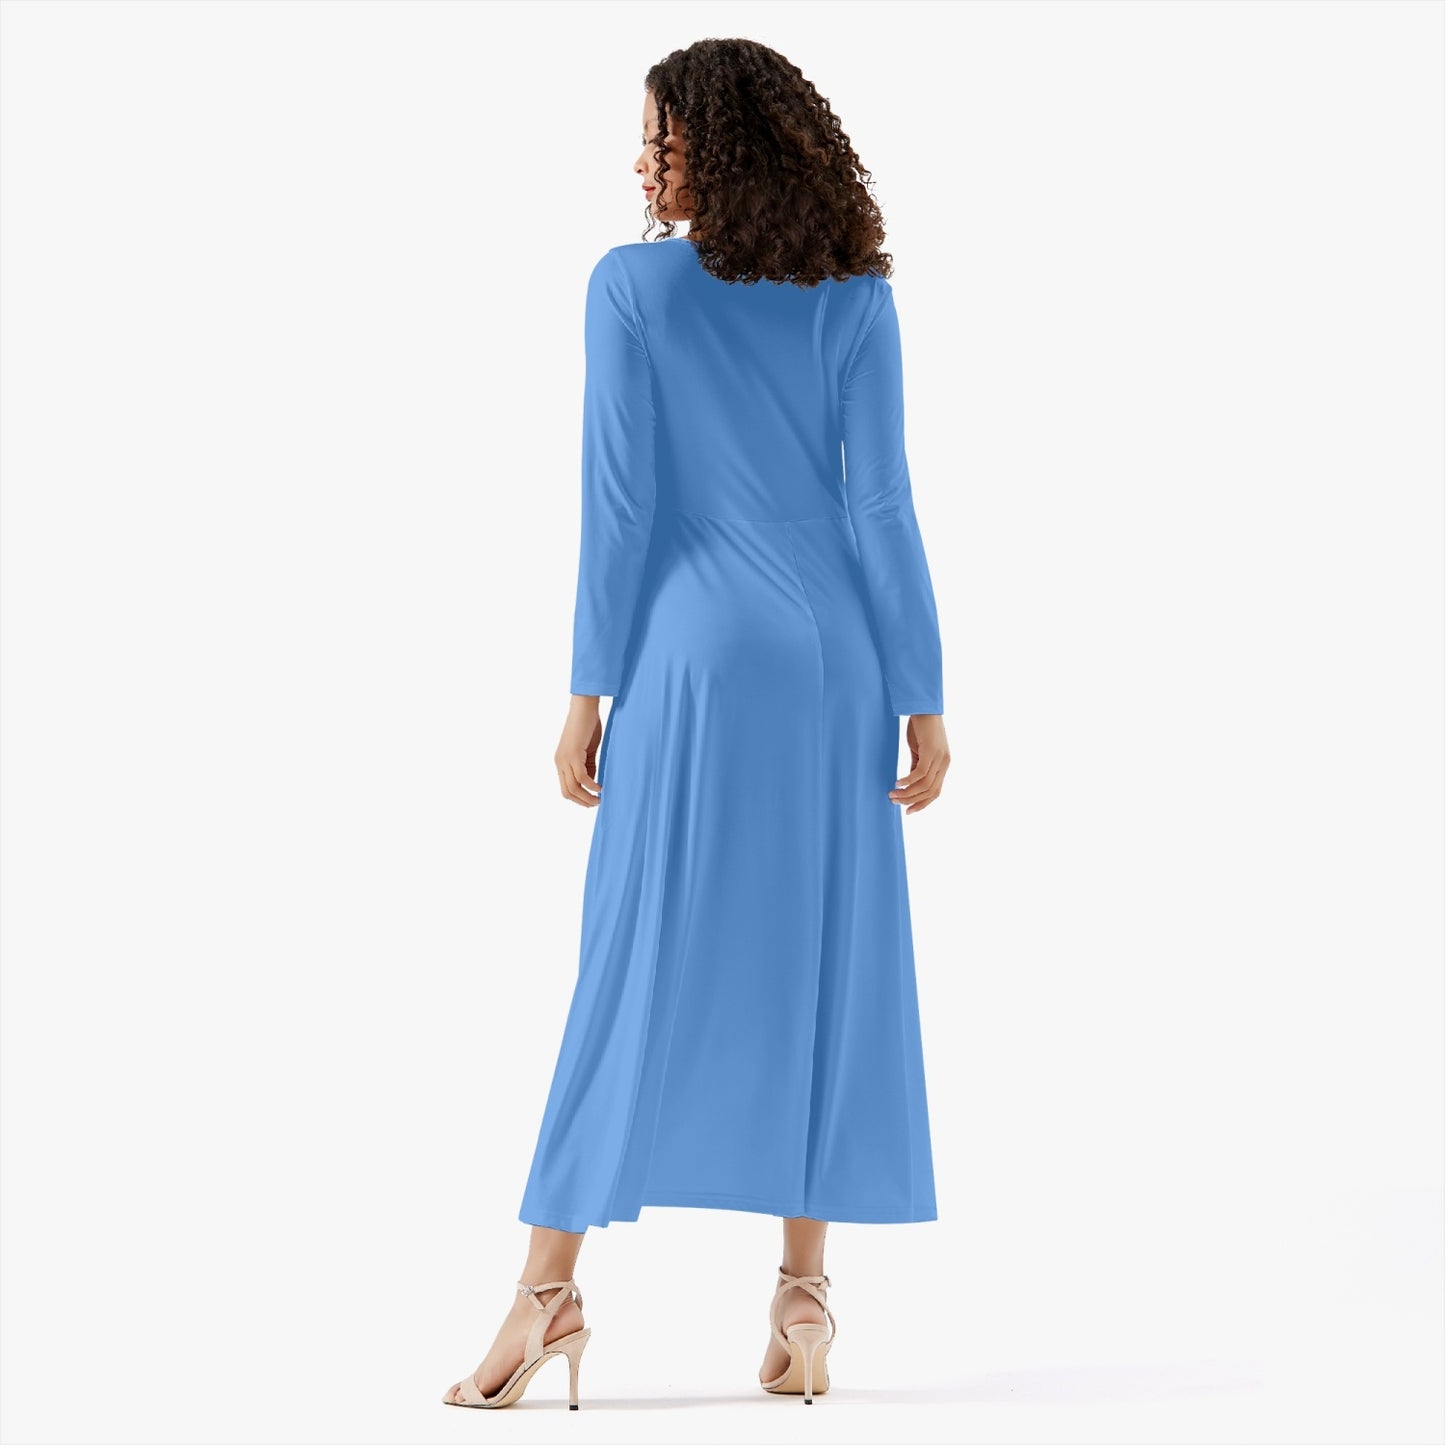 ANSWERED PRAYER PARTNERSHIP Women's Long-Sleeve One-piece Dress